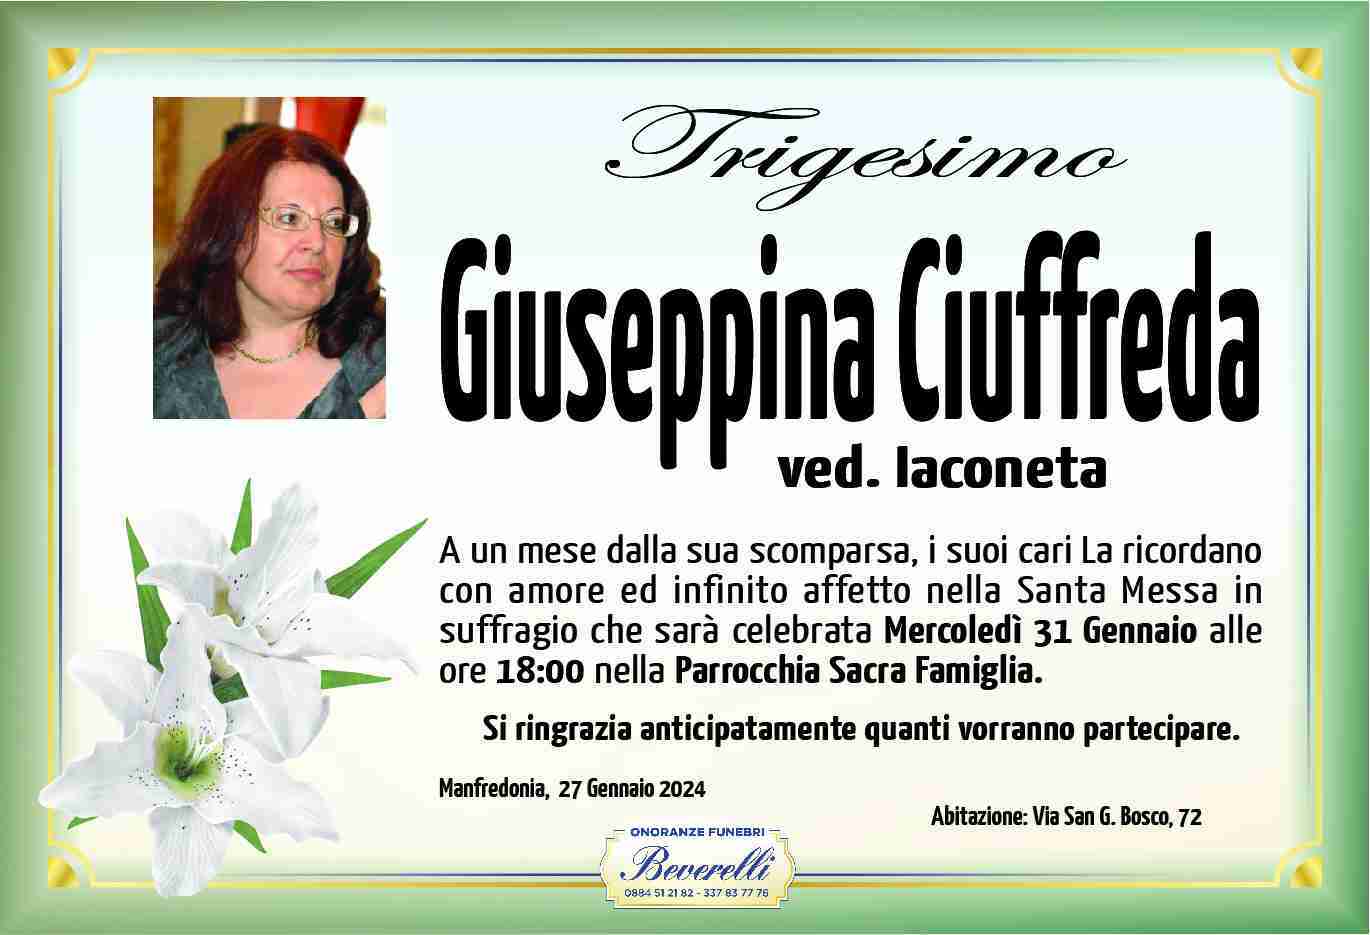 Giuseppina Ciuffreda